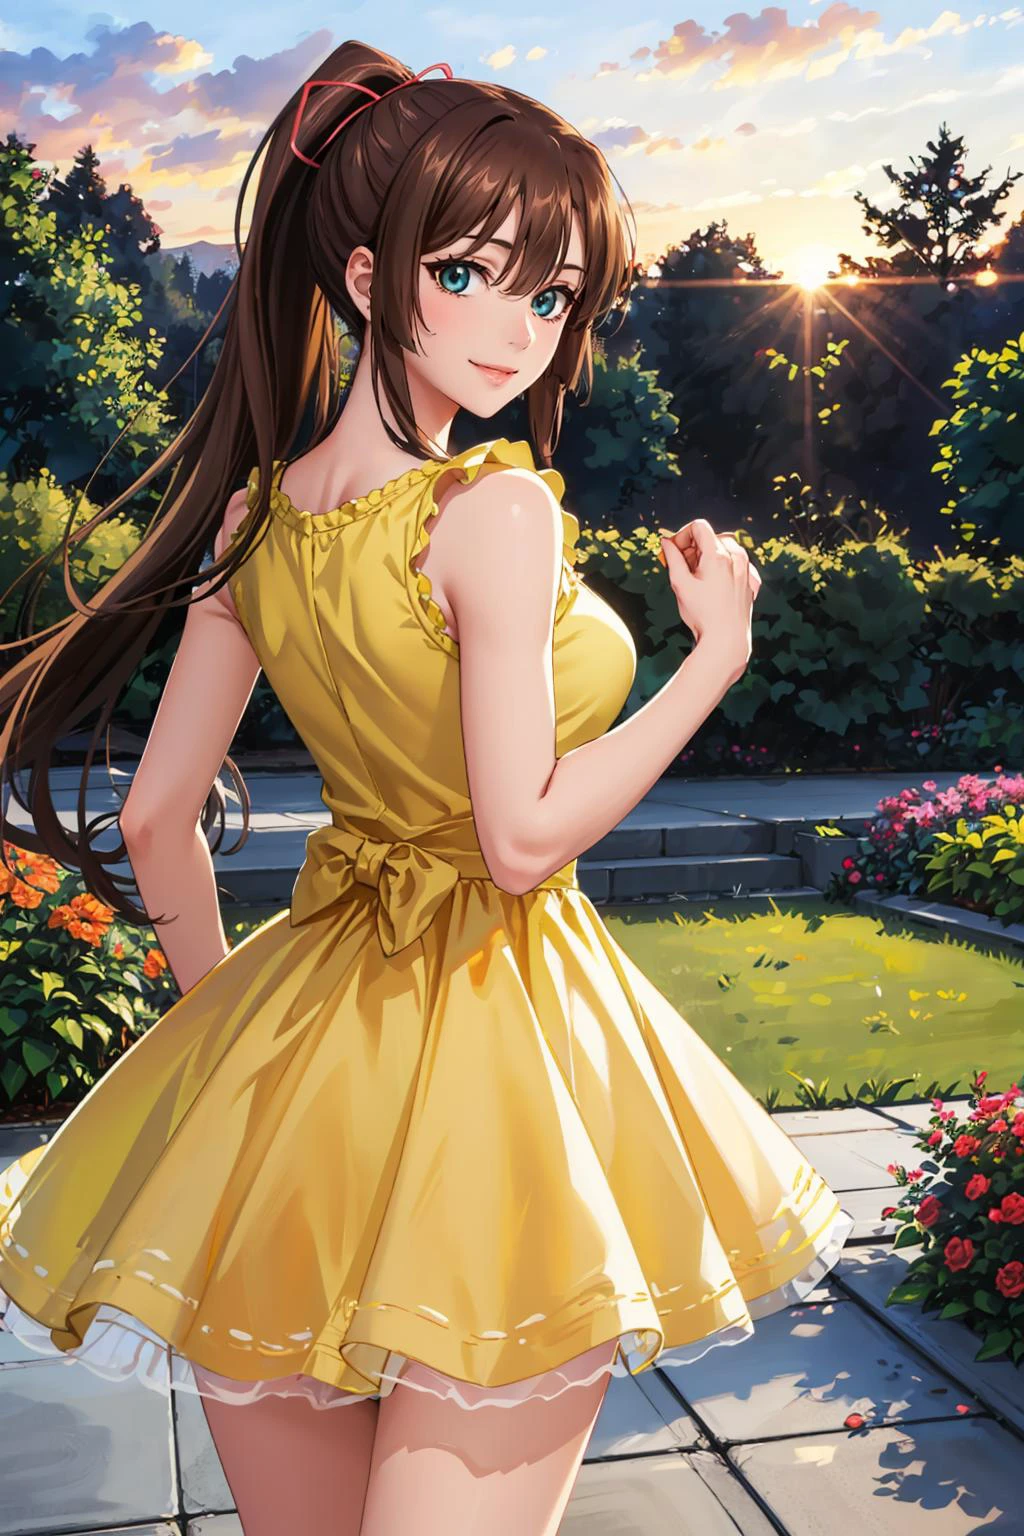 masterpiece, best quality, kirasaka sayaka, ponytail, hair ribbon, yellow sundress, from behind, garden, sunset, looking at viewer, smile edgYSD,woman wearing a yellow sundress